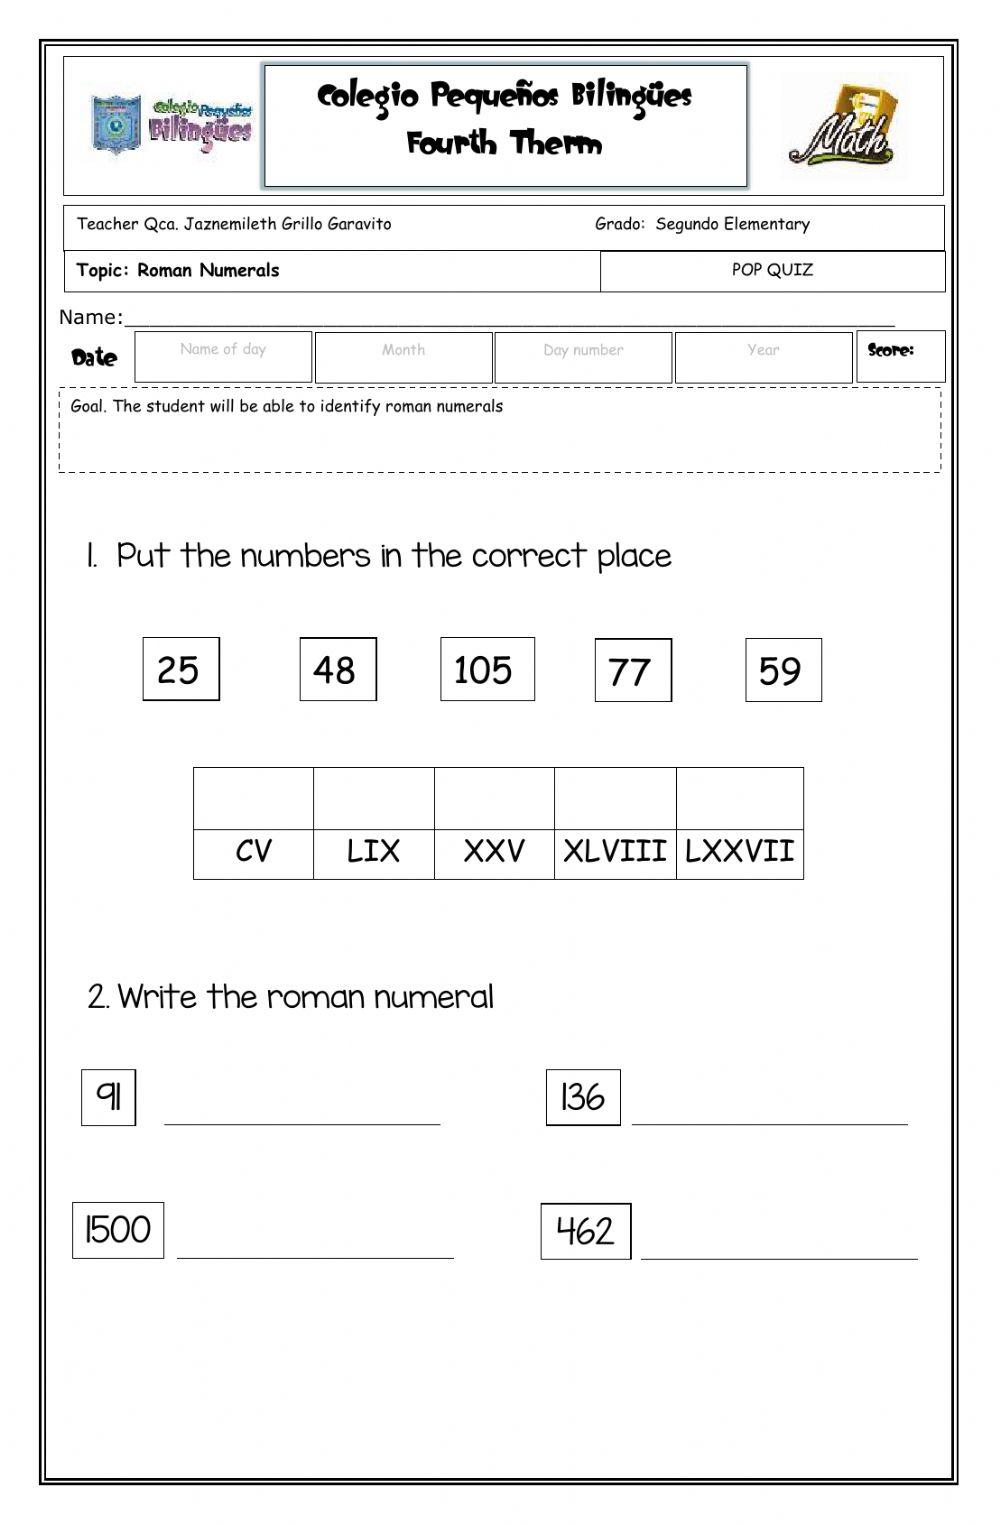 Pop quiz - Roman numerals -second grade- fourth term -2020